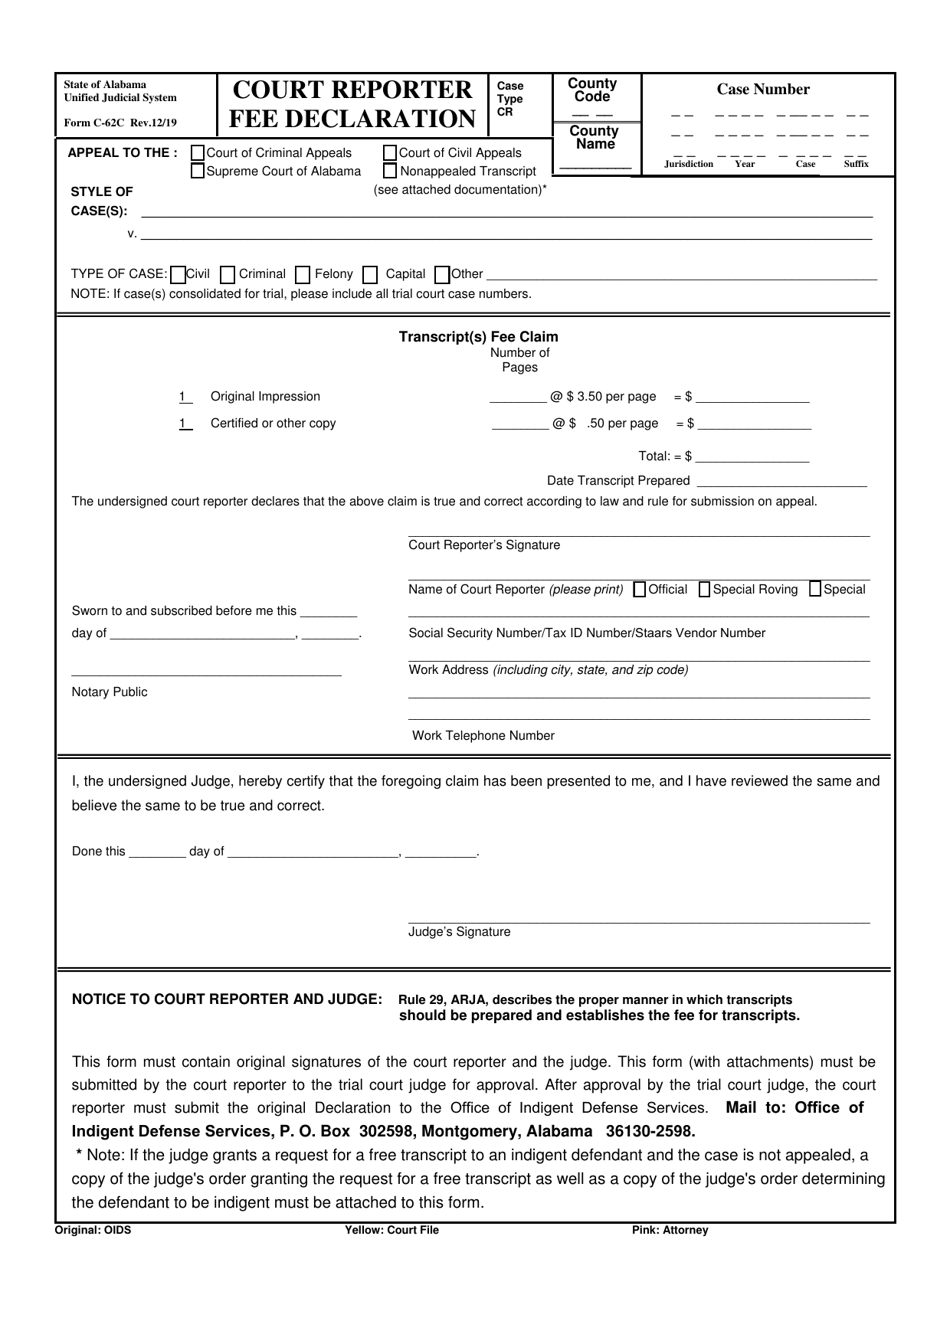 Form C-62C Court Reporter Fee Declaration - Alabama, Page 1